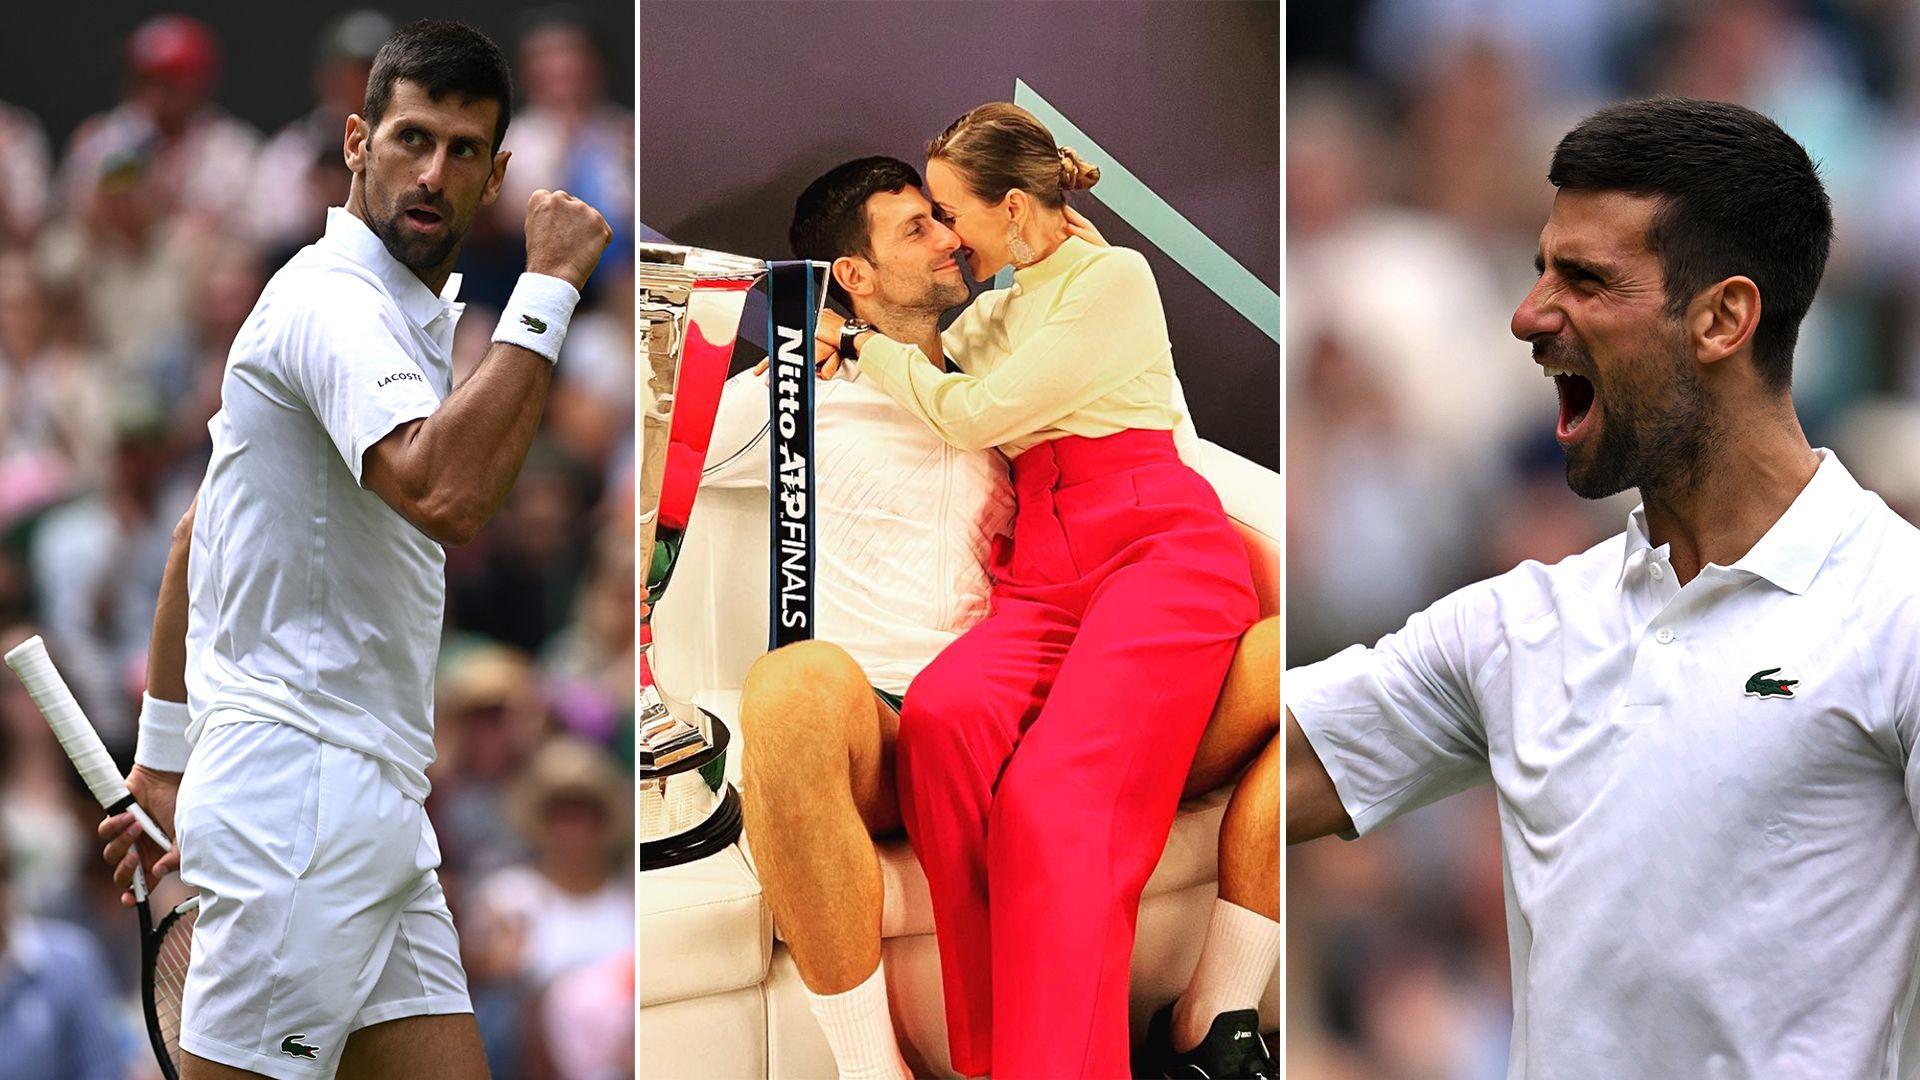 Novak Djokovic, Serbian tennis player celebrates victory